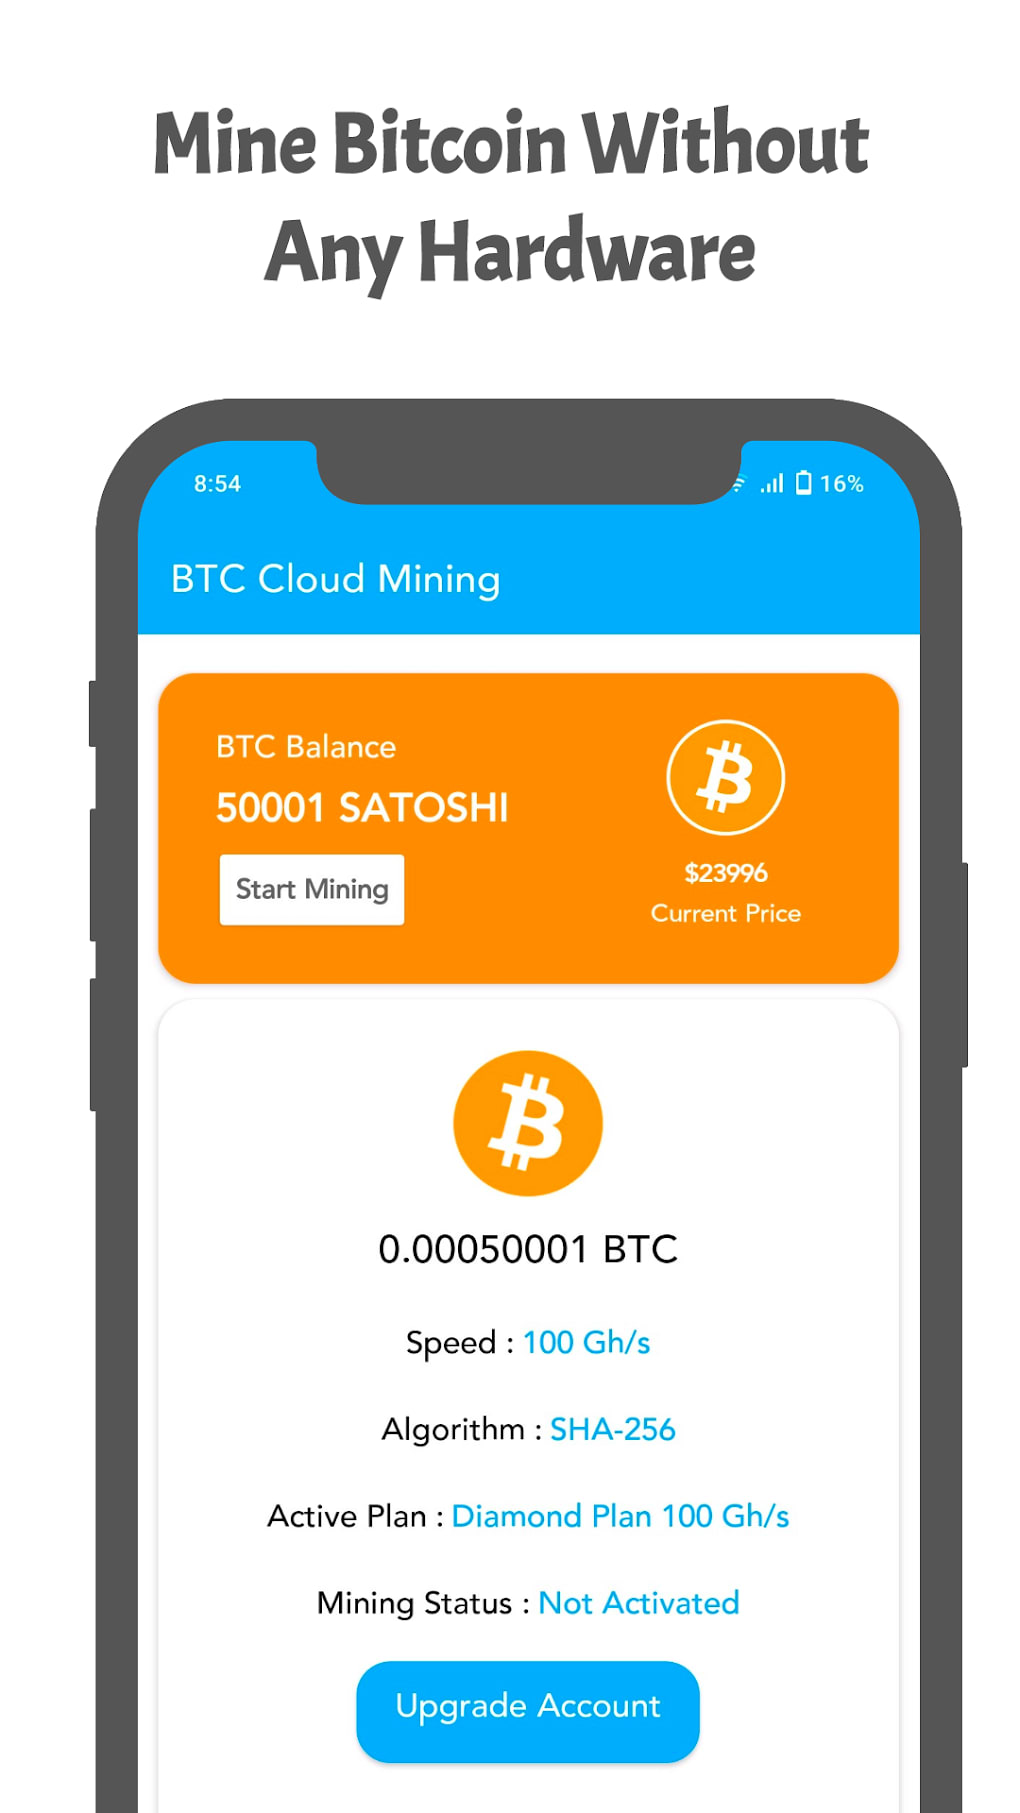 NiceHash - Leading Cryptocurrency Platform for Mining | NiceHash